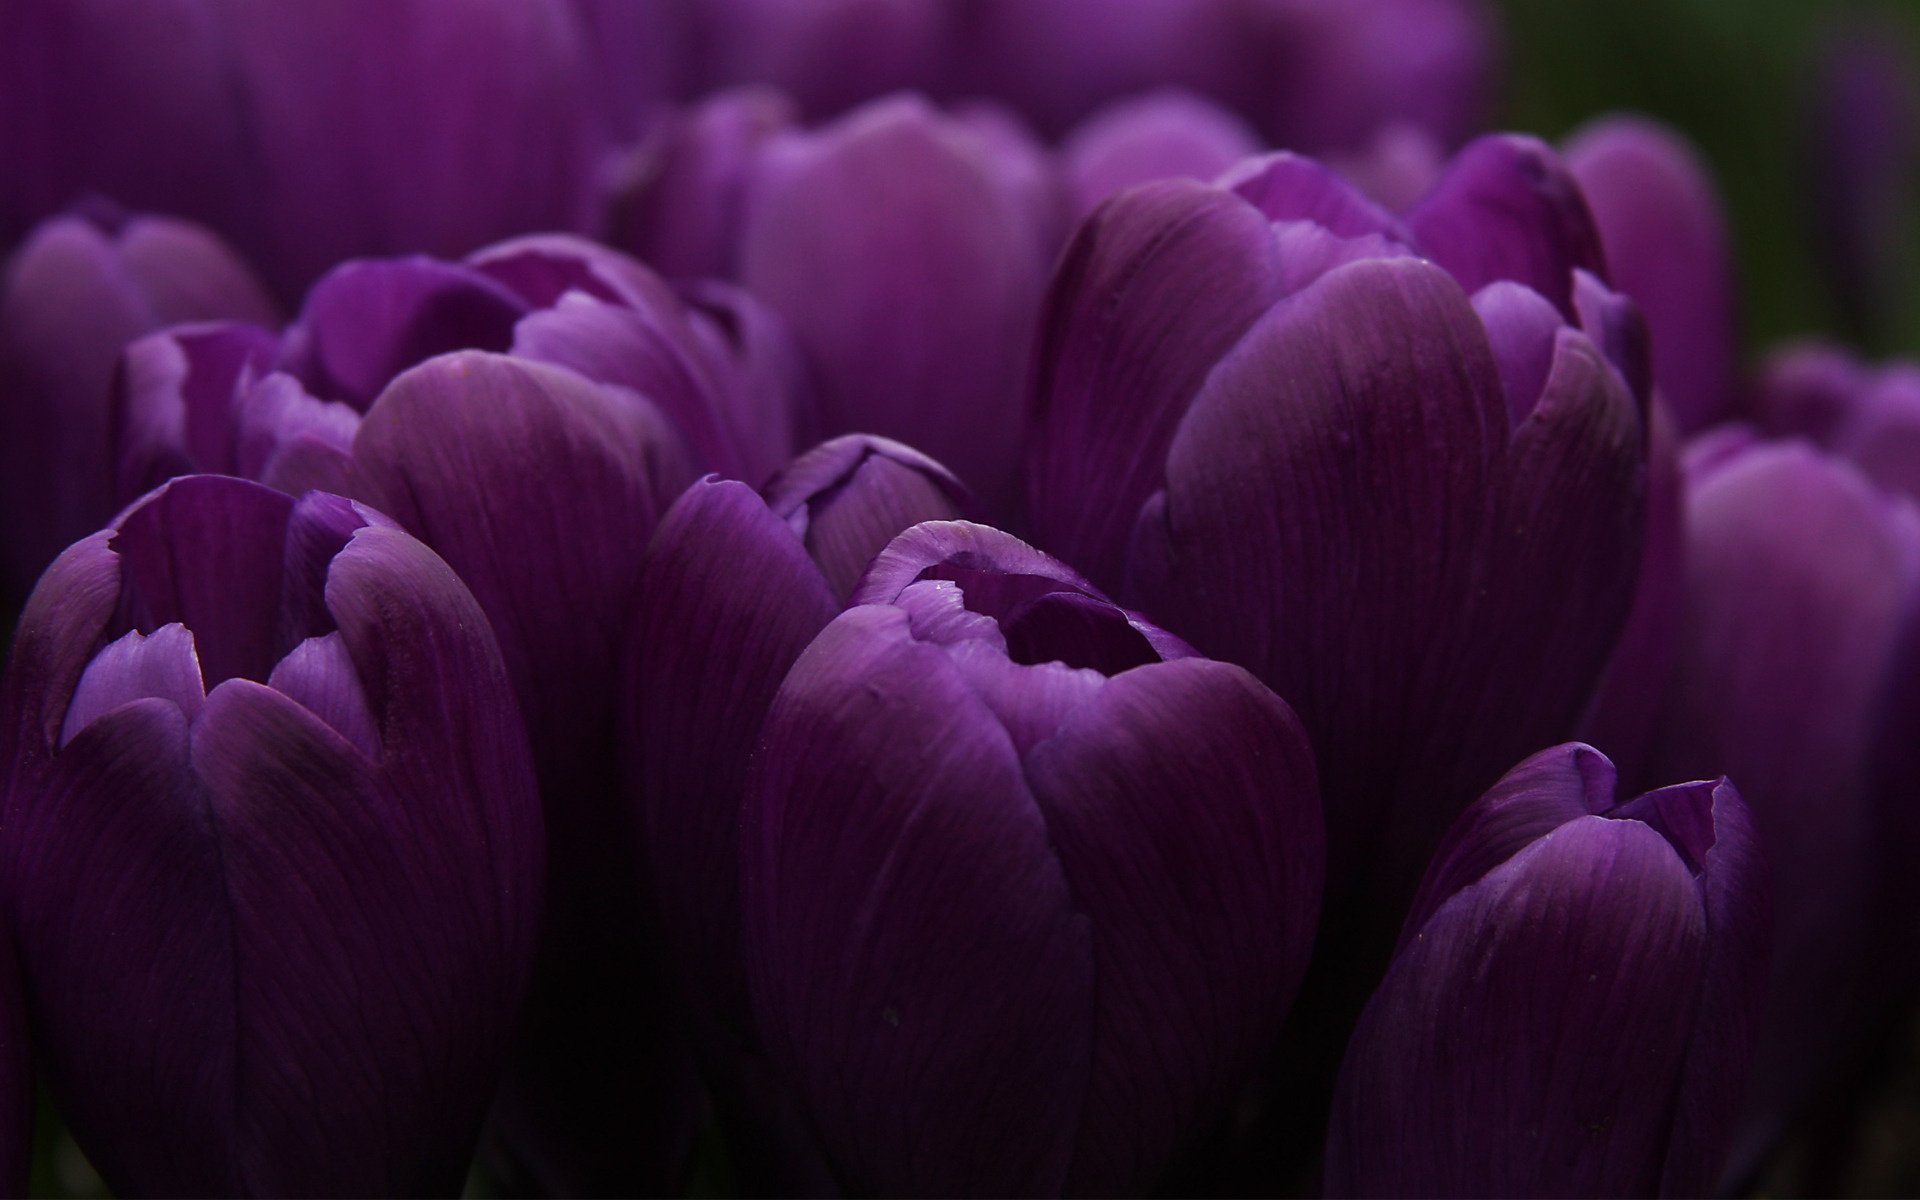 Bouquet of purple tulips on a dark background